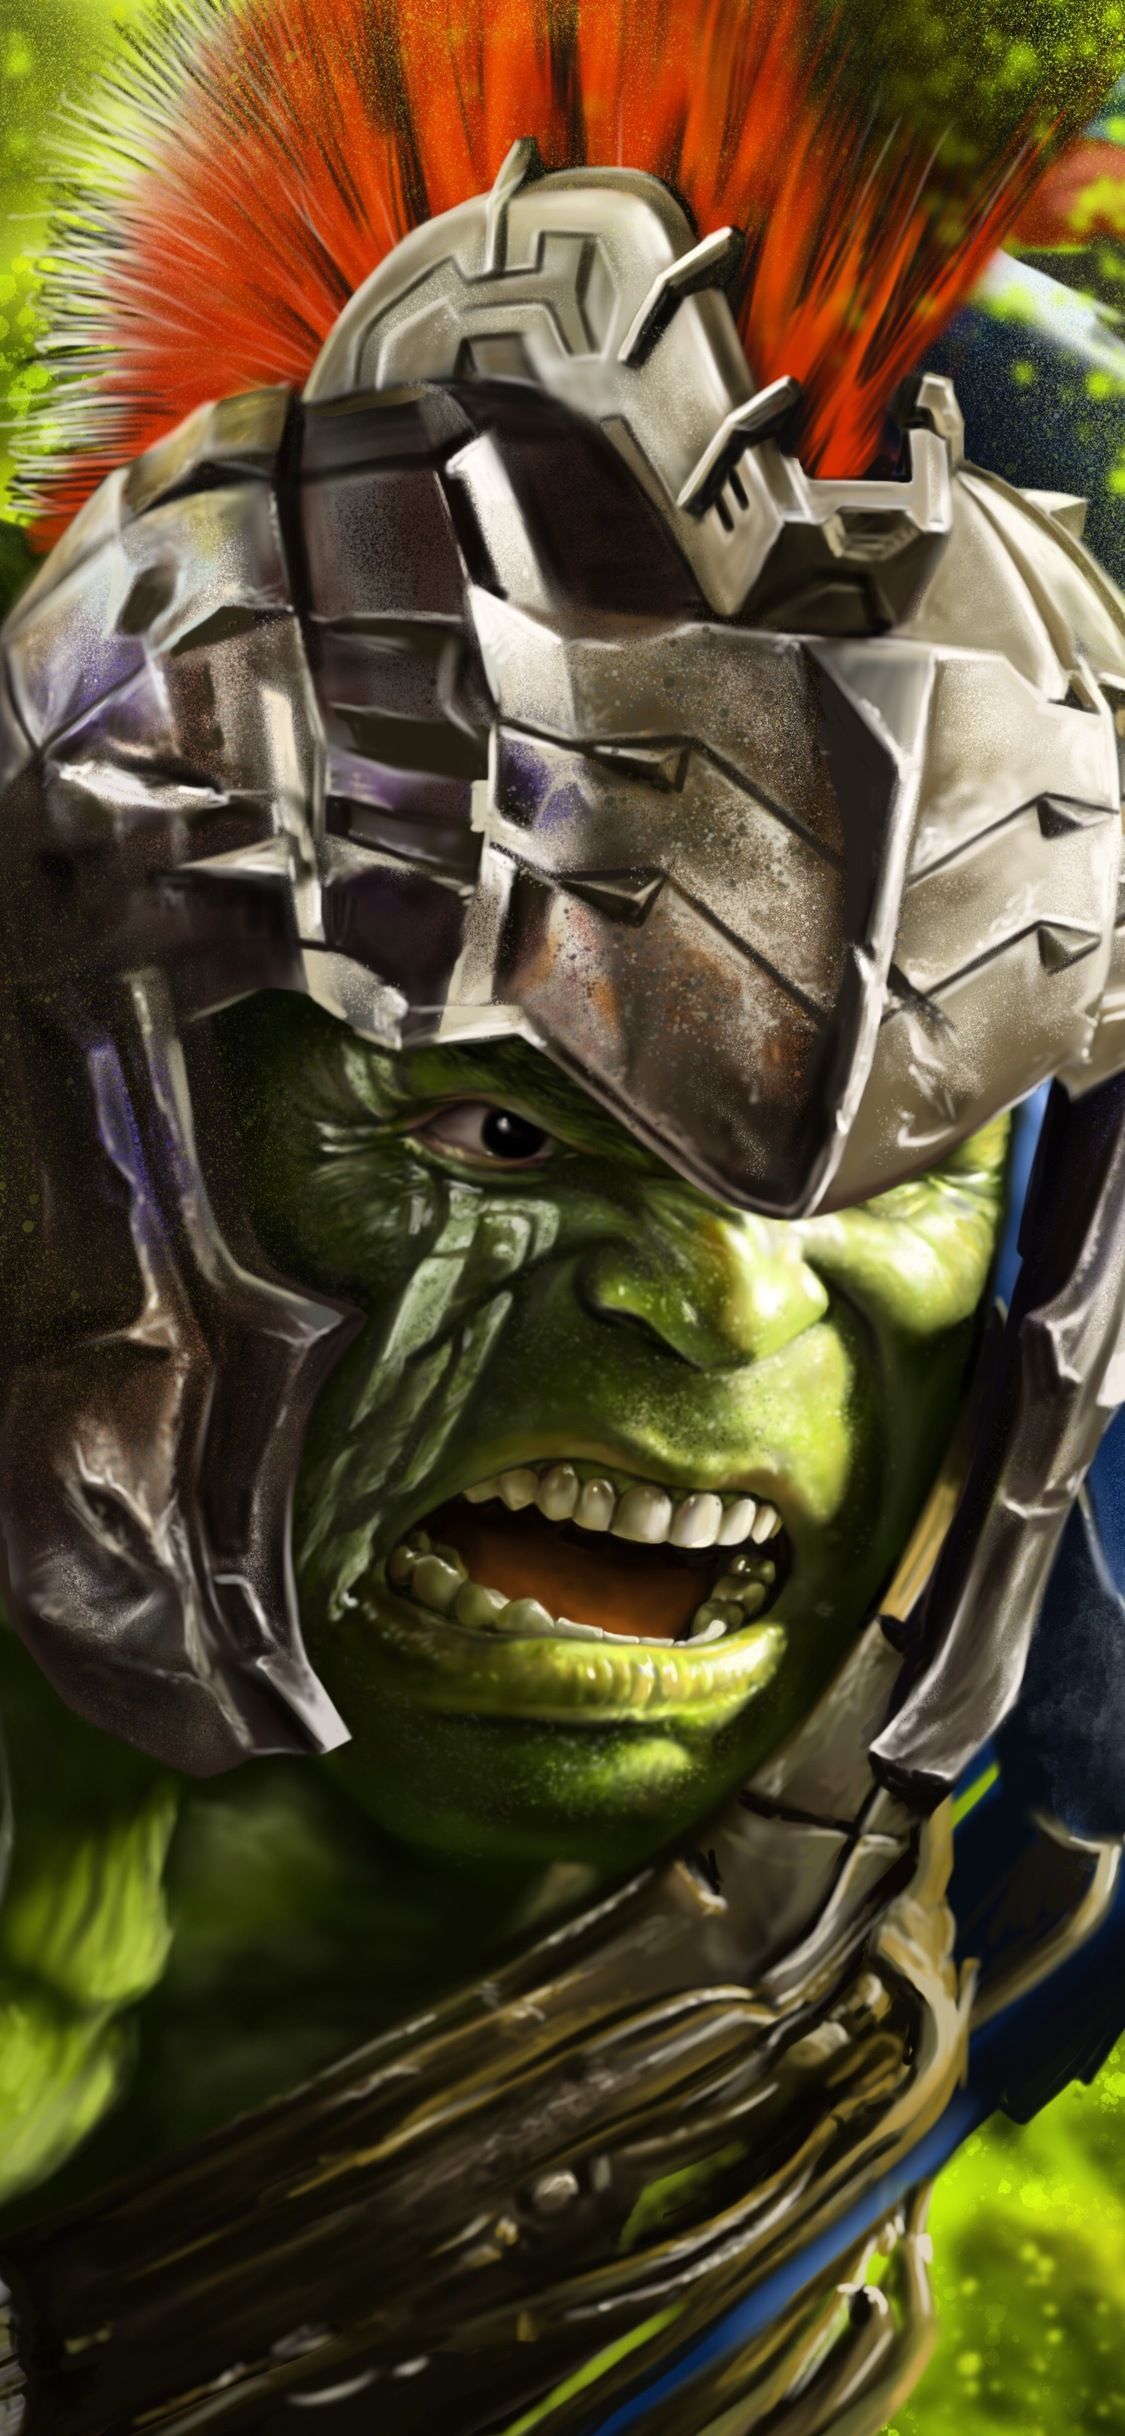 Hulk In Thor Ragnarok 8k Artwork iPhone XS, iPhone iPhone X HD 4k Wallpaper, Image, Backgrou. Hulk artwork, Marvel wallpaper hd, Superhero wallpaper